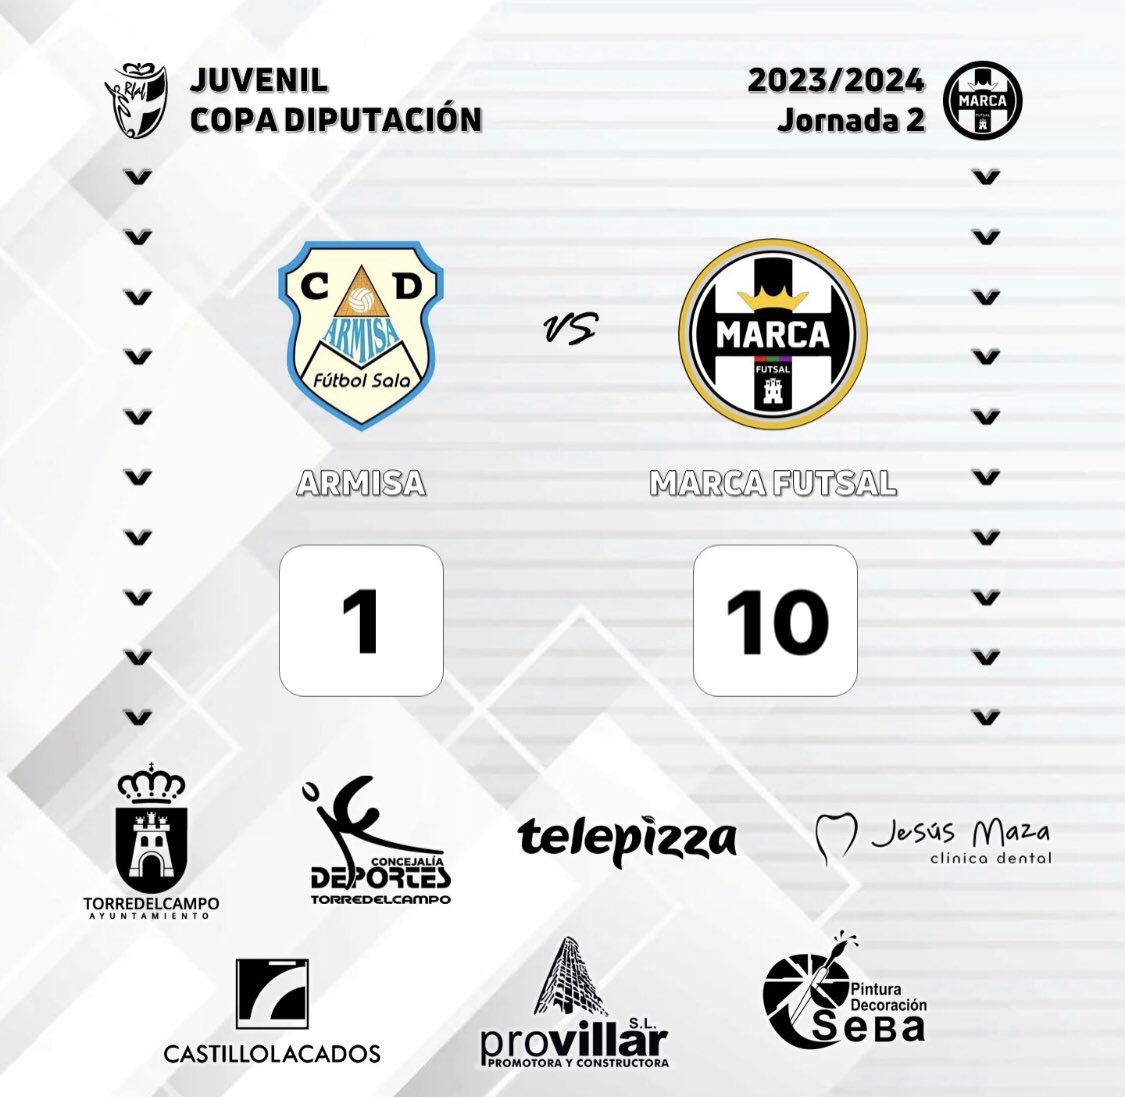 🔵🔵Armisa 1-10 # Juvenil ⚪️⚫️

📝Segunda jornada de copa y segunda goleada. 

⚽️⚽️⚽️⚽️Valdivia
⚽️⚽️Iván
⚽️Raúl Pulgar
⚽️Javi Sánchez
⚽️David
⚽️Perdi